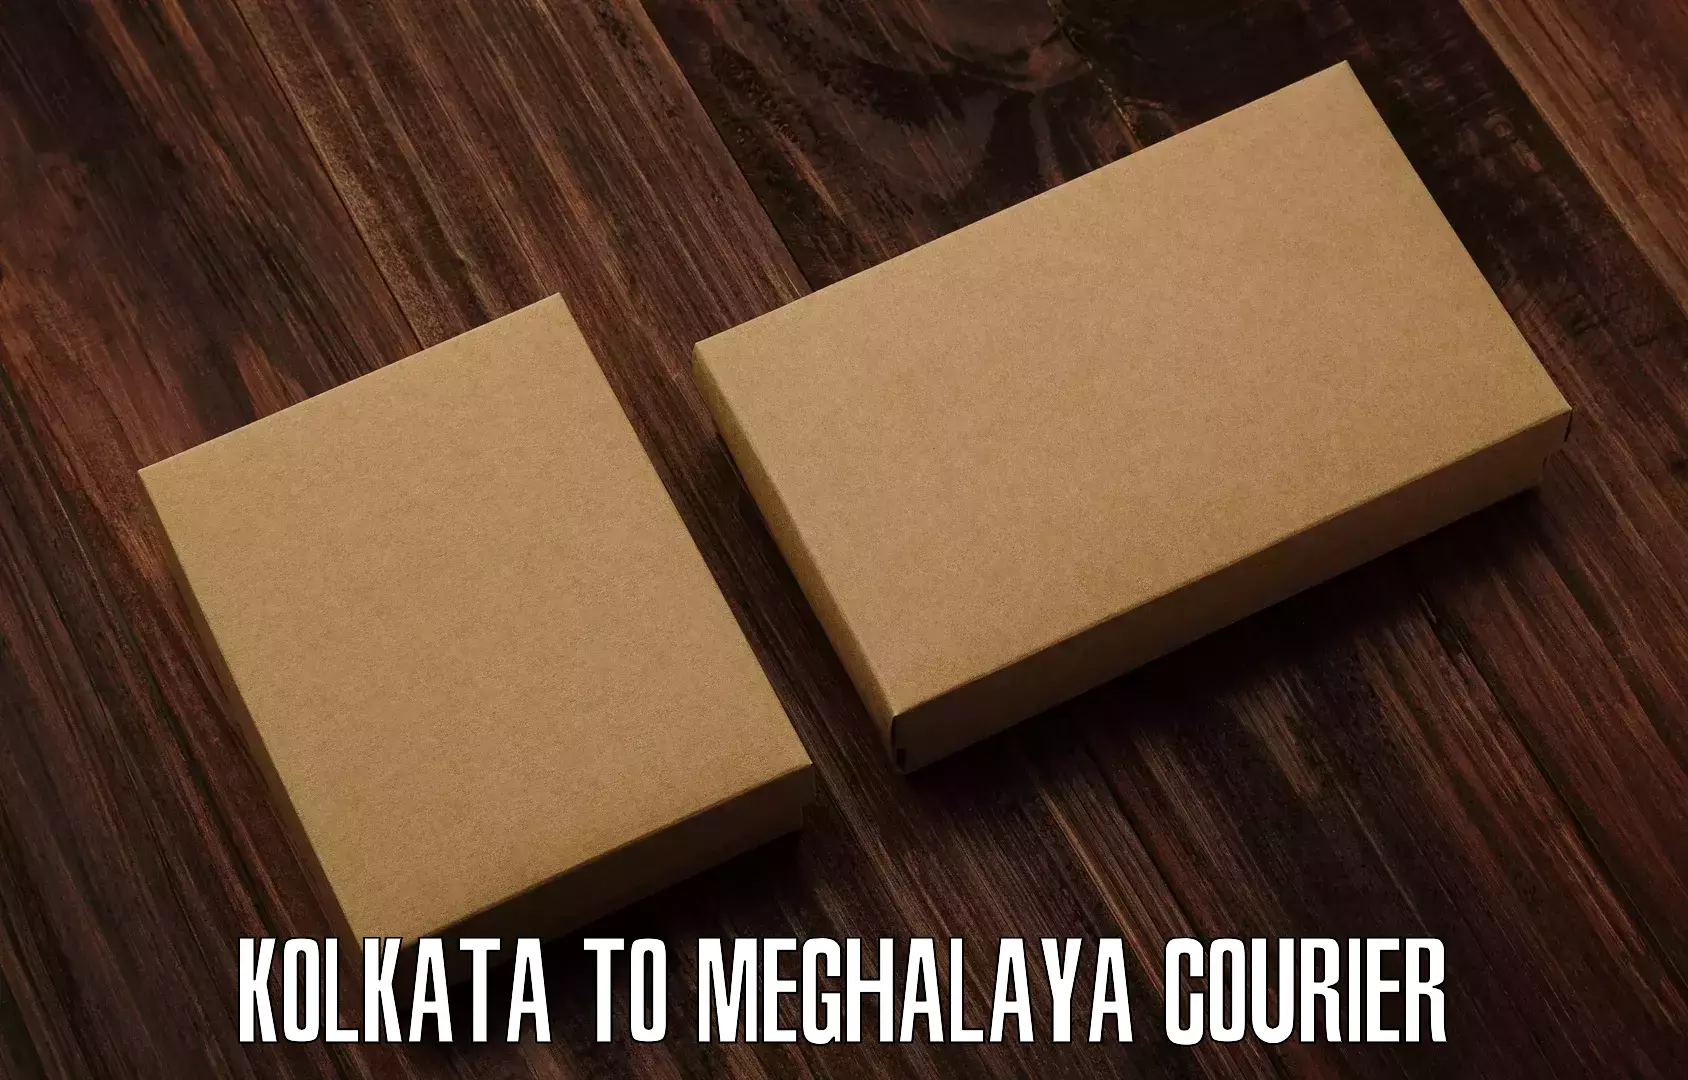 24-hour courier service Kolkata to Meghalaya